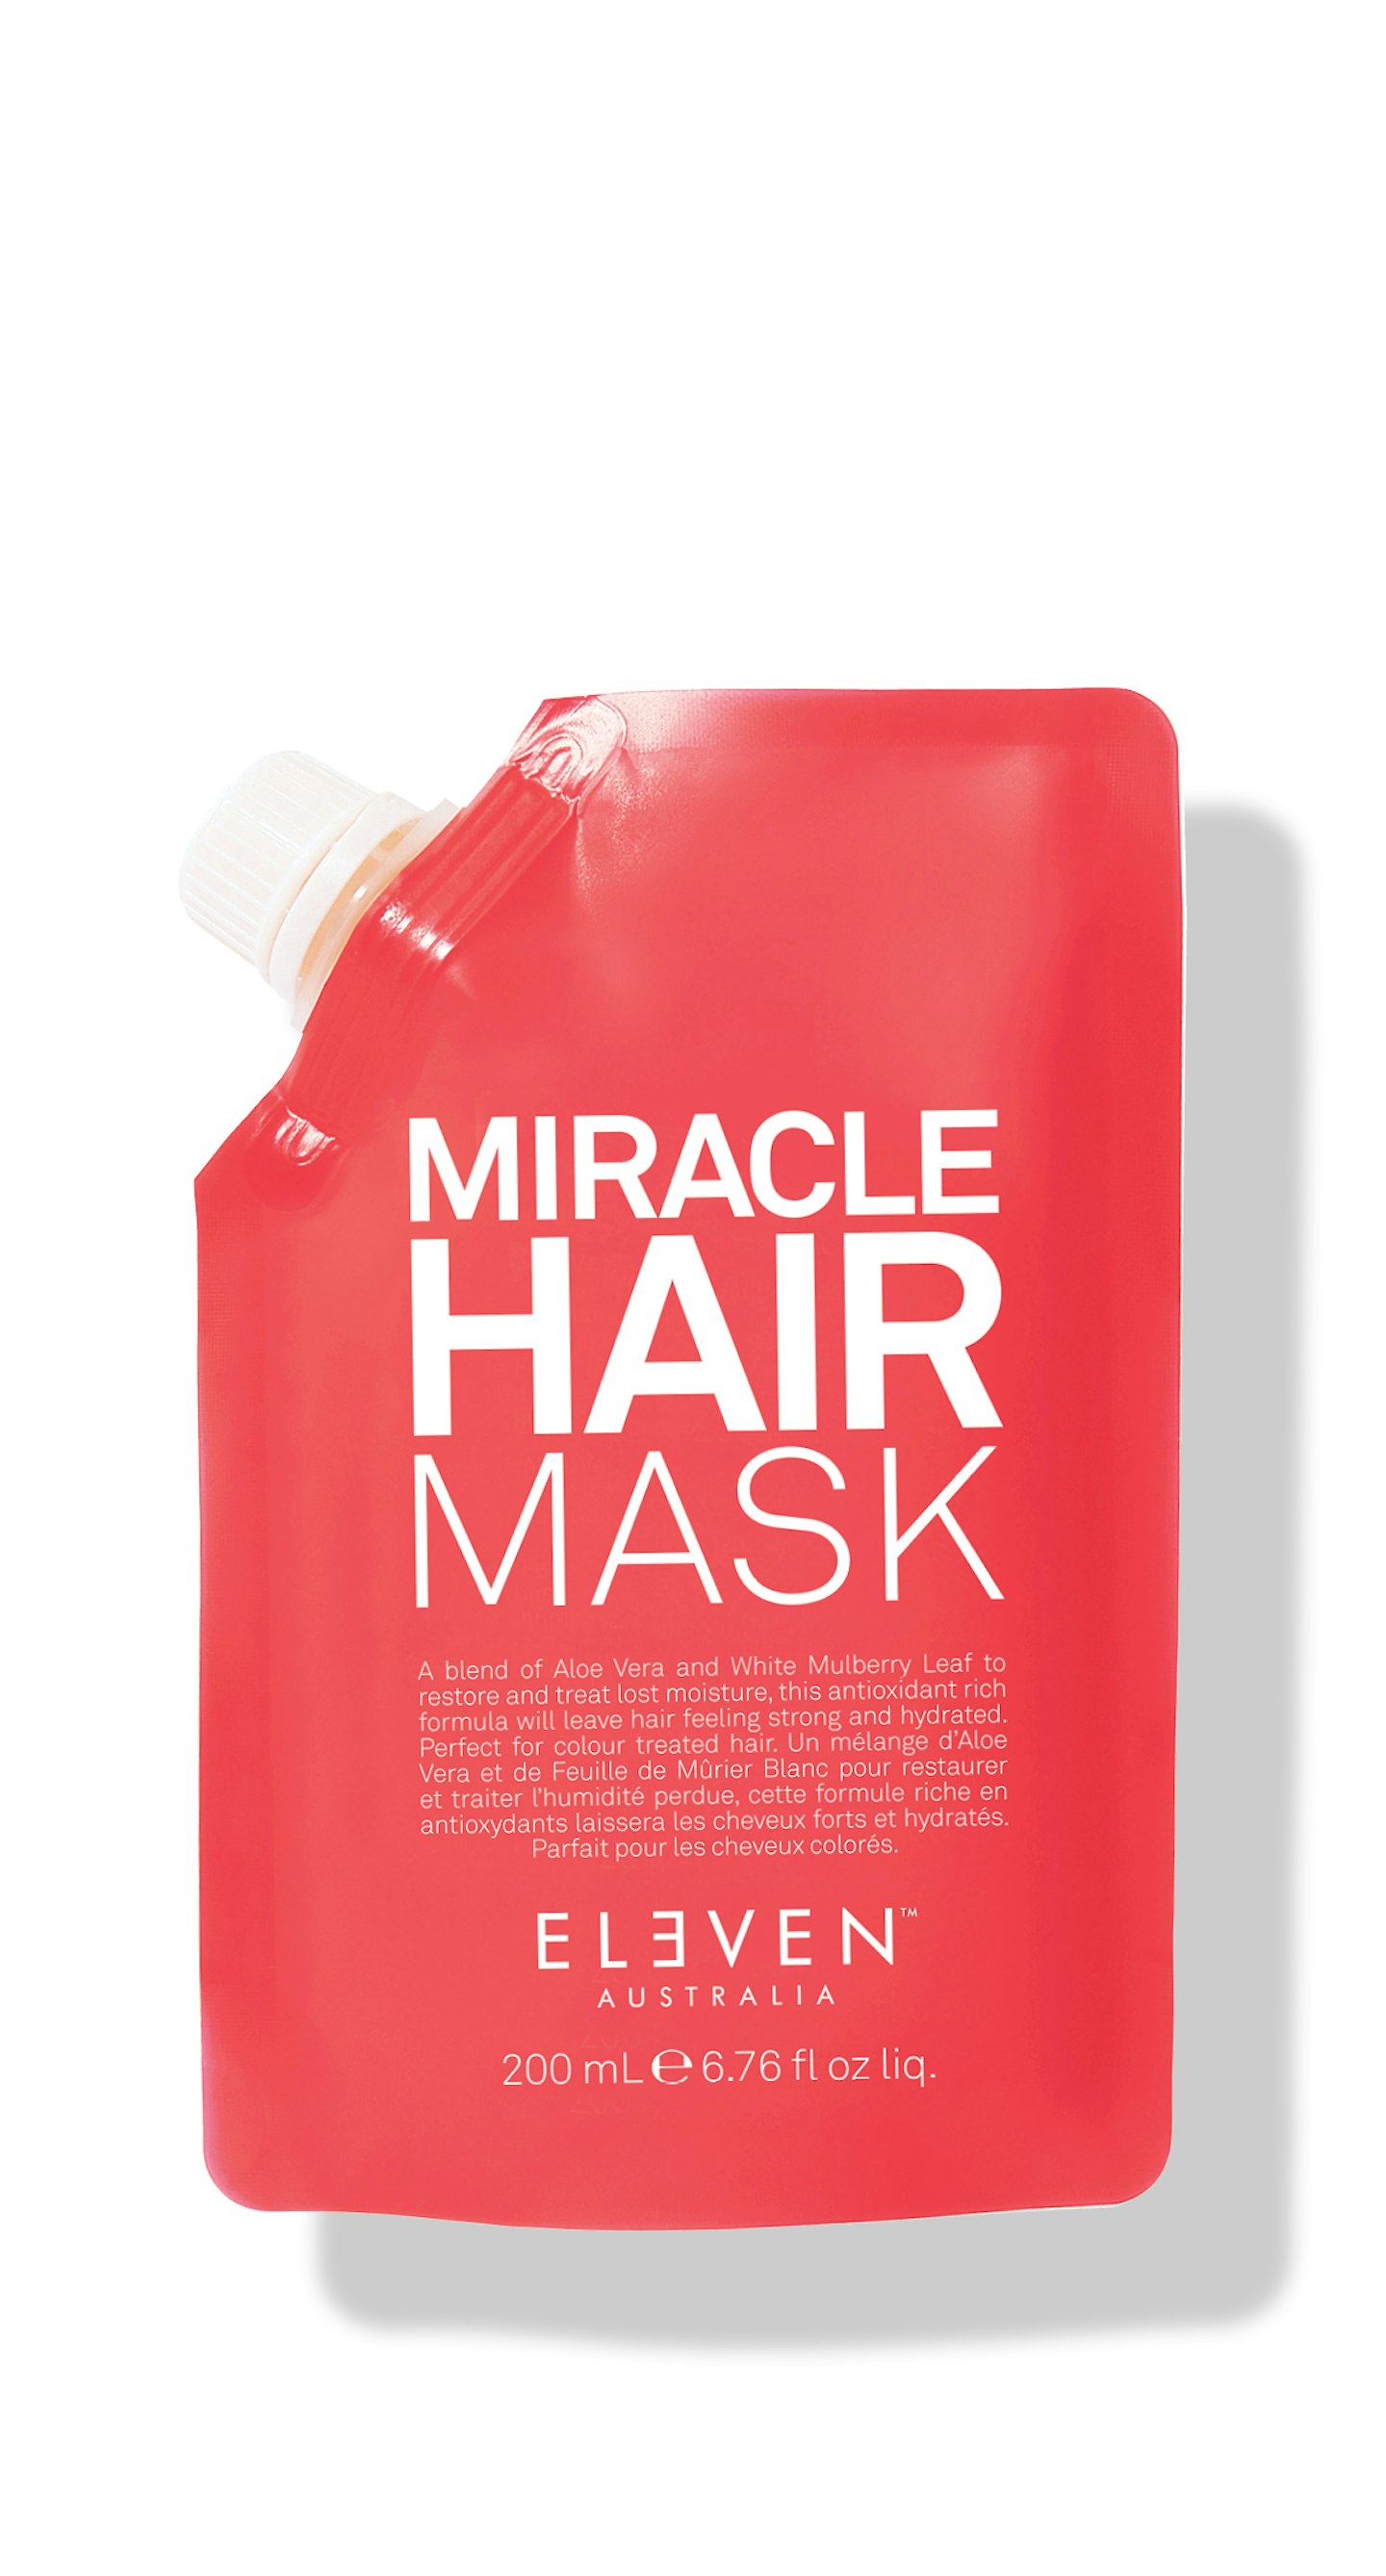 ELEVEN Australia, Miracle hair mask, £19.50